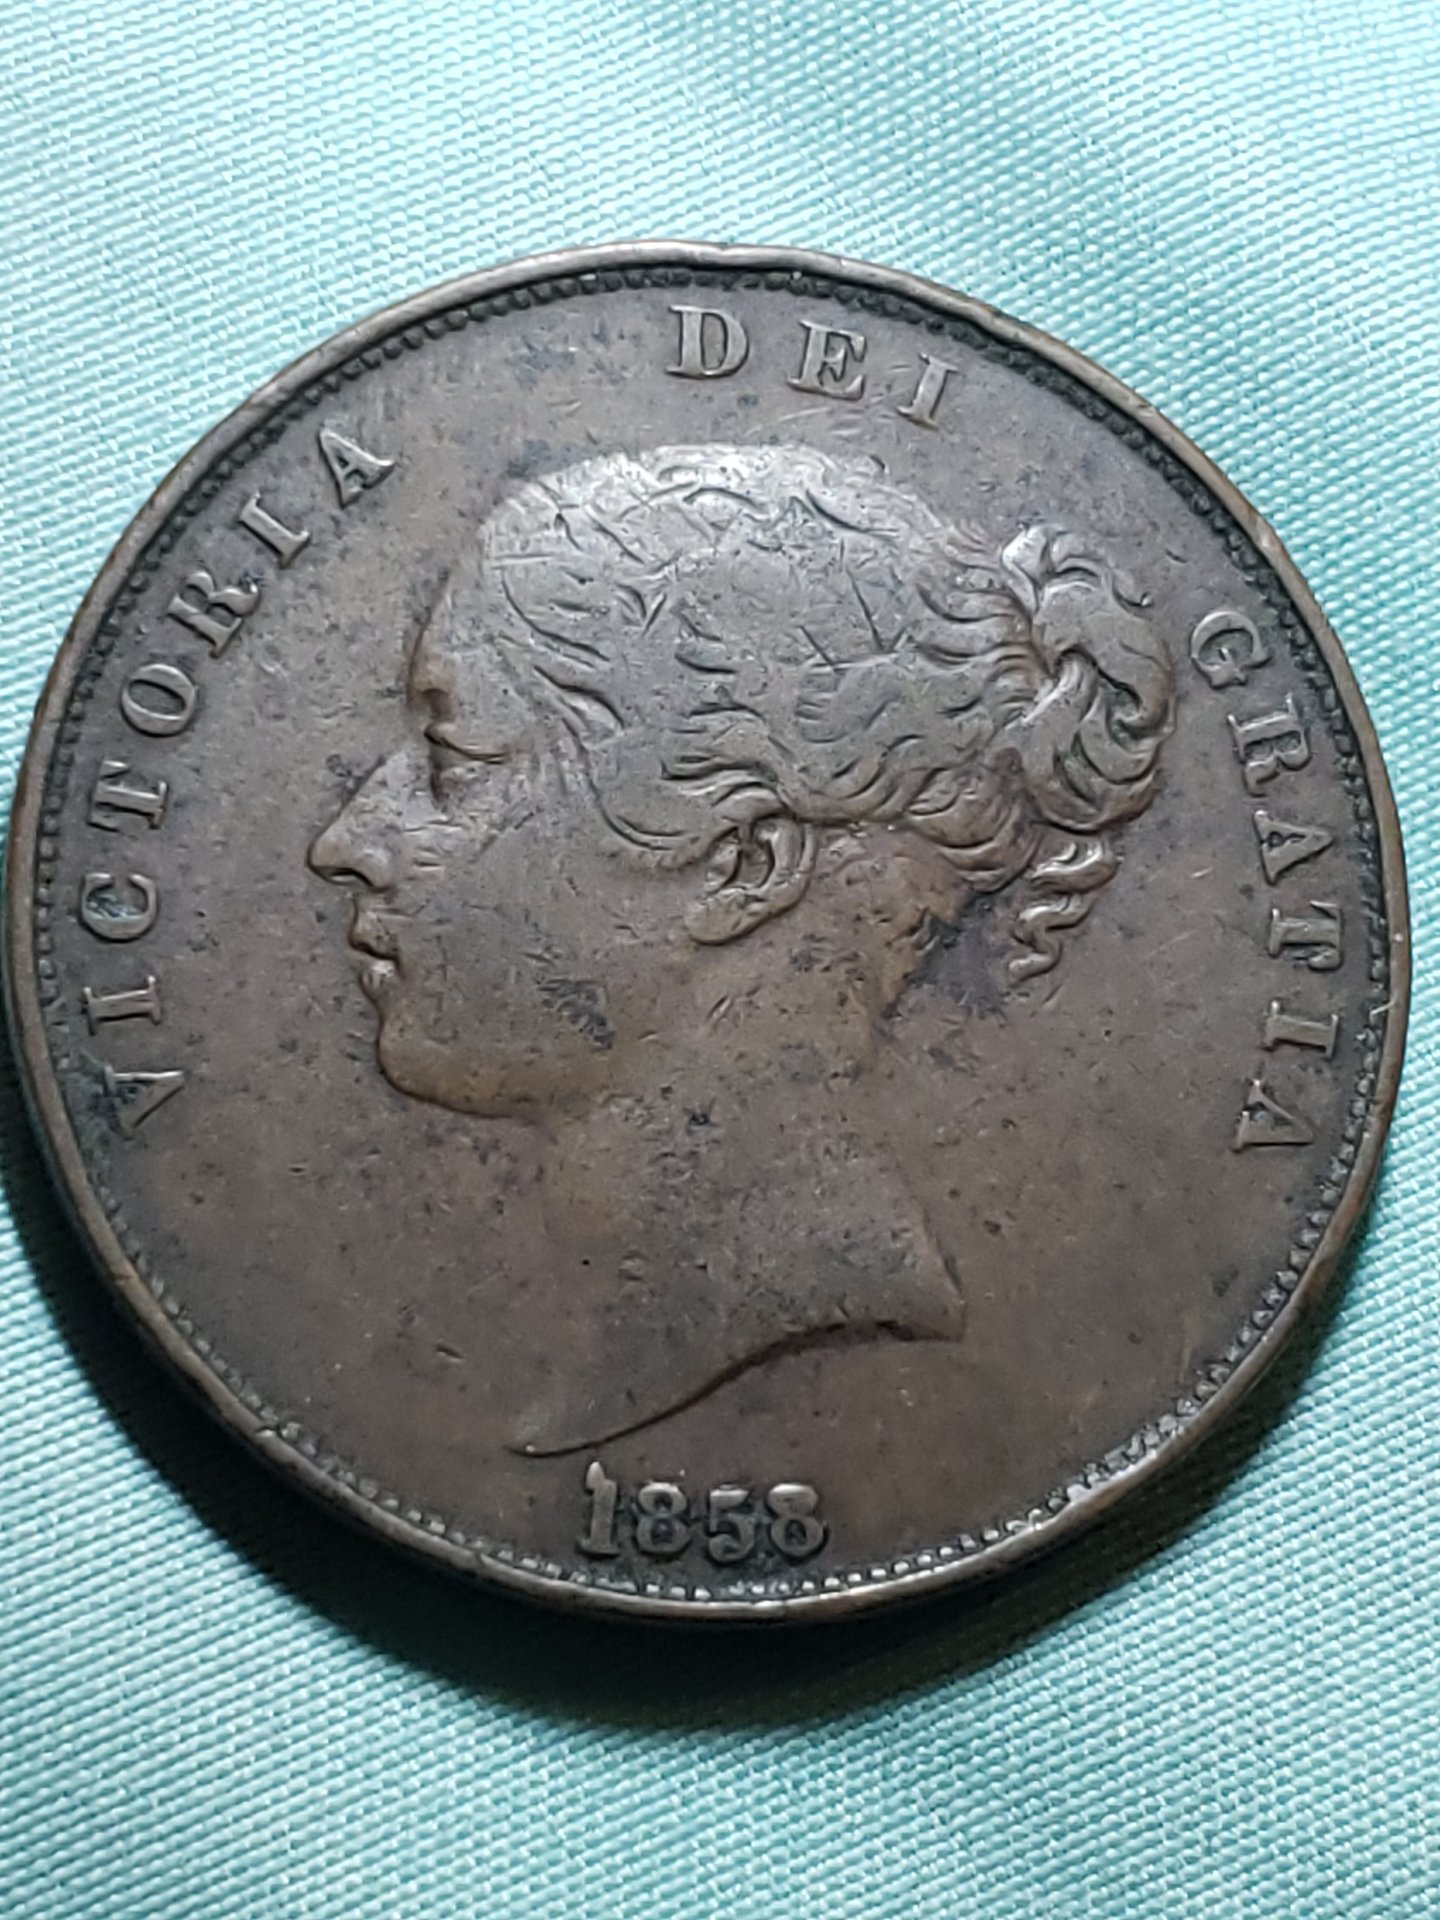 1962 d penny struck through? | Coin Talk